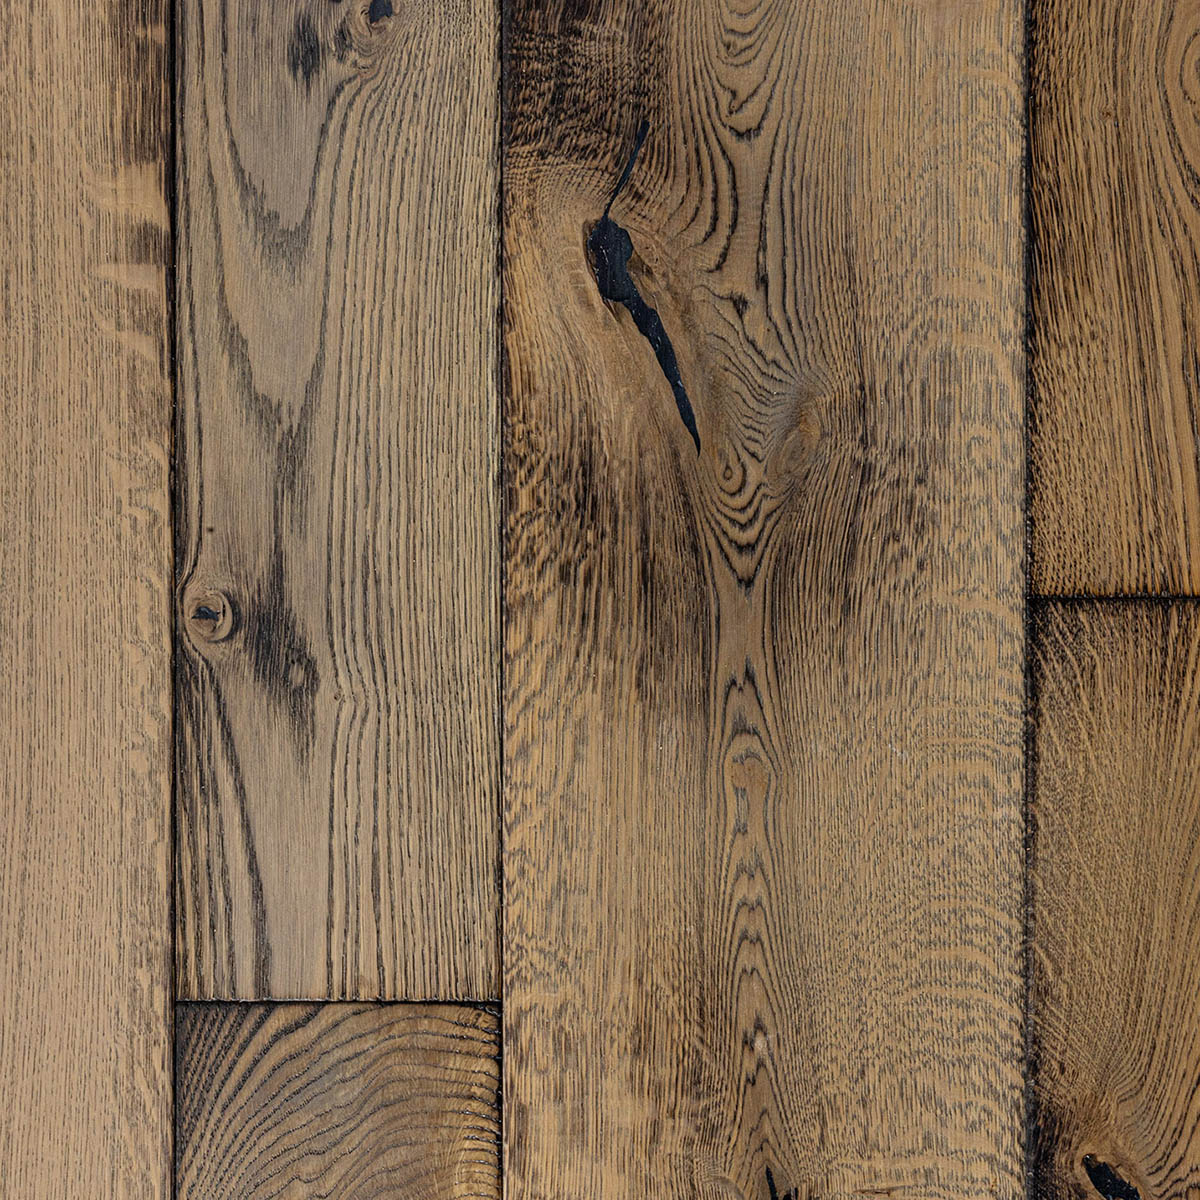 Harlington - Rustic Grade Mixed Width Wood Floor